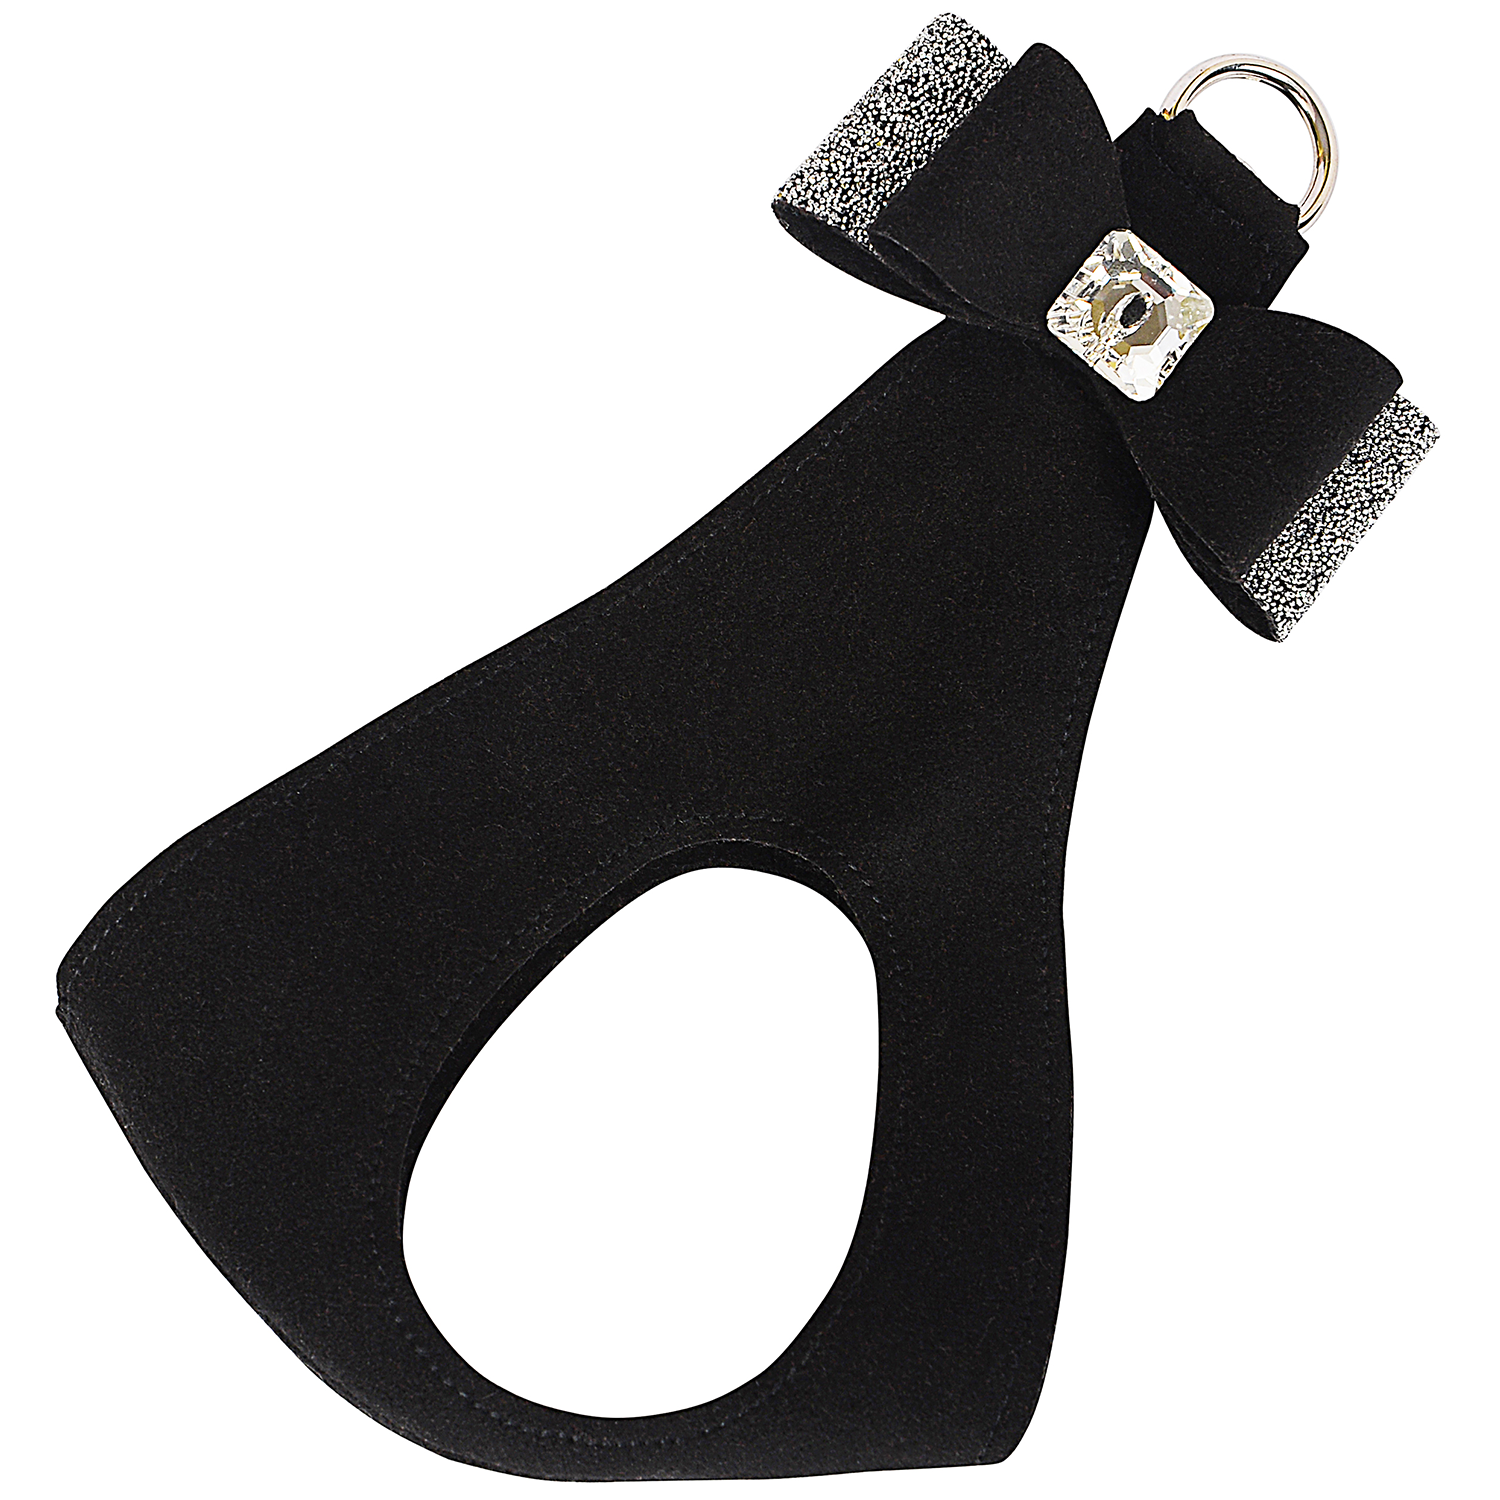 Pet Boutique - Dog Harness - Black Crystal Stellar Big Bow Step-in Dog Harness by Susan Lanci